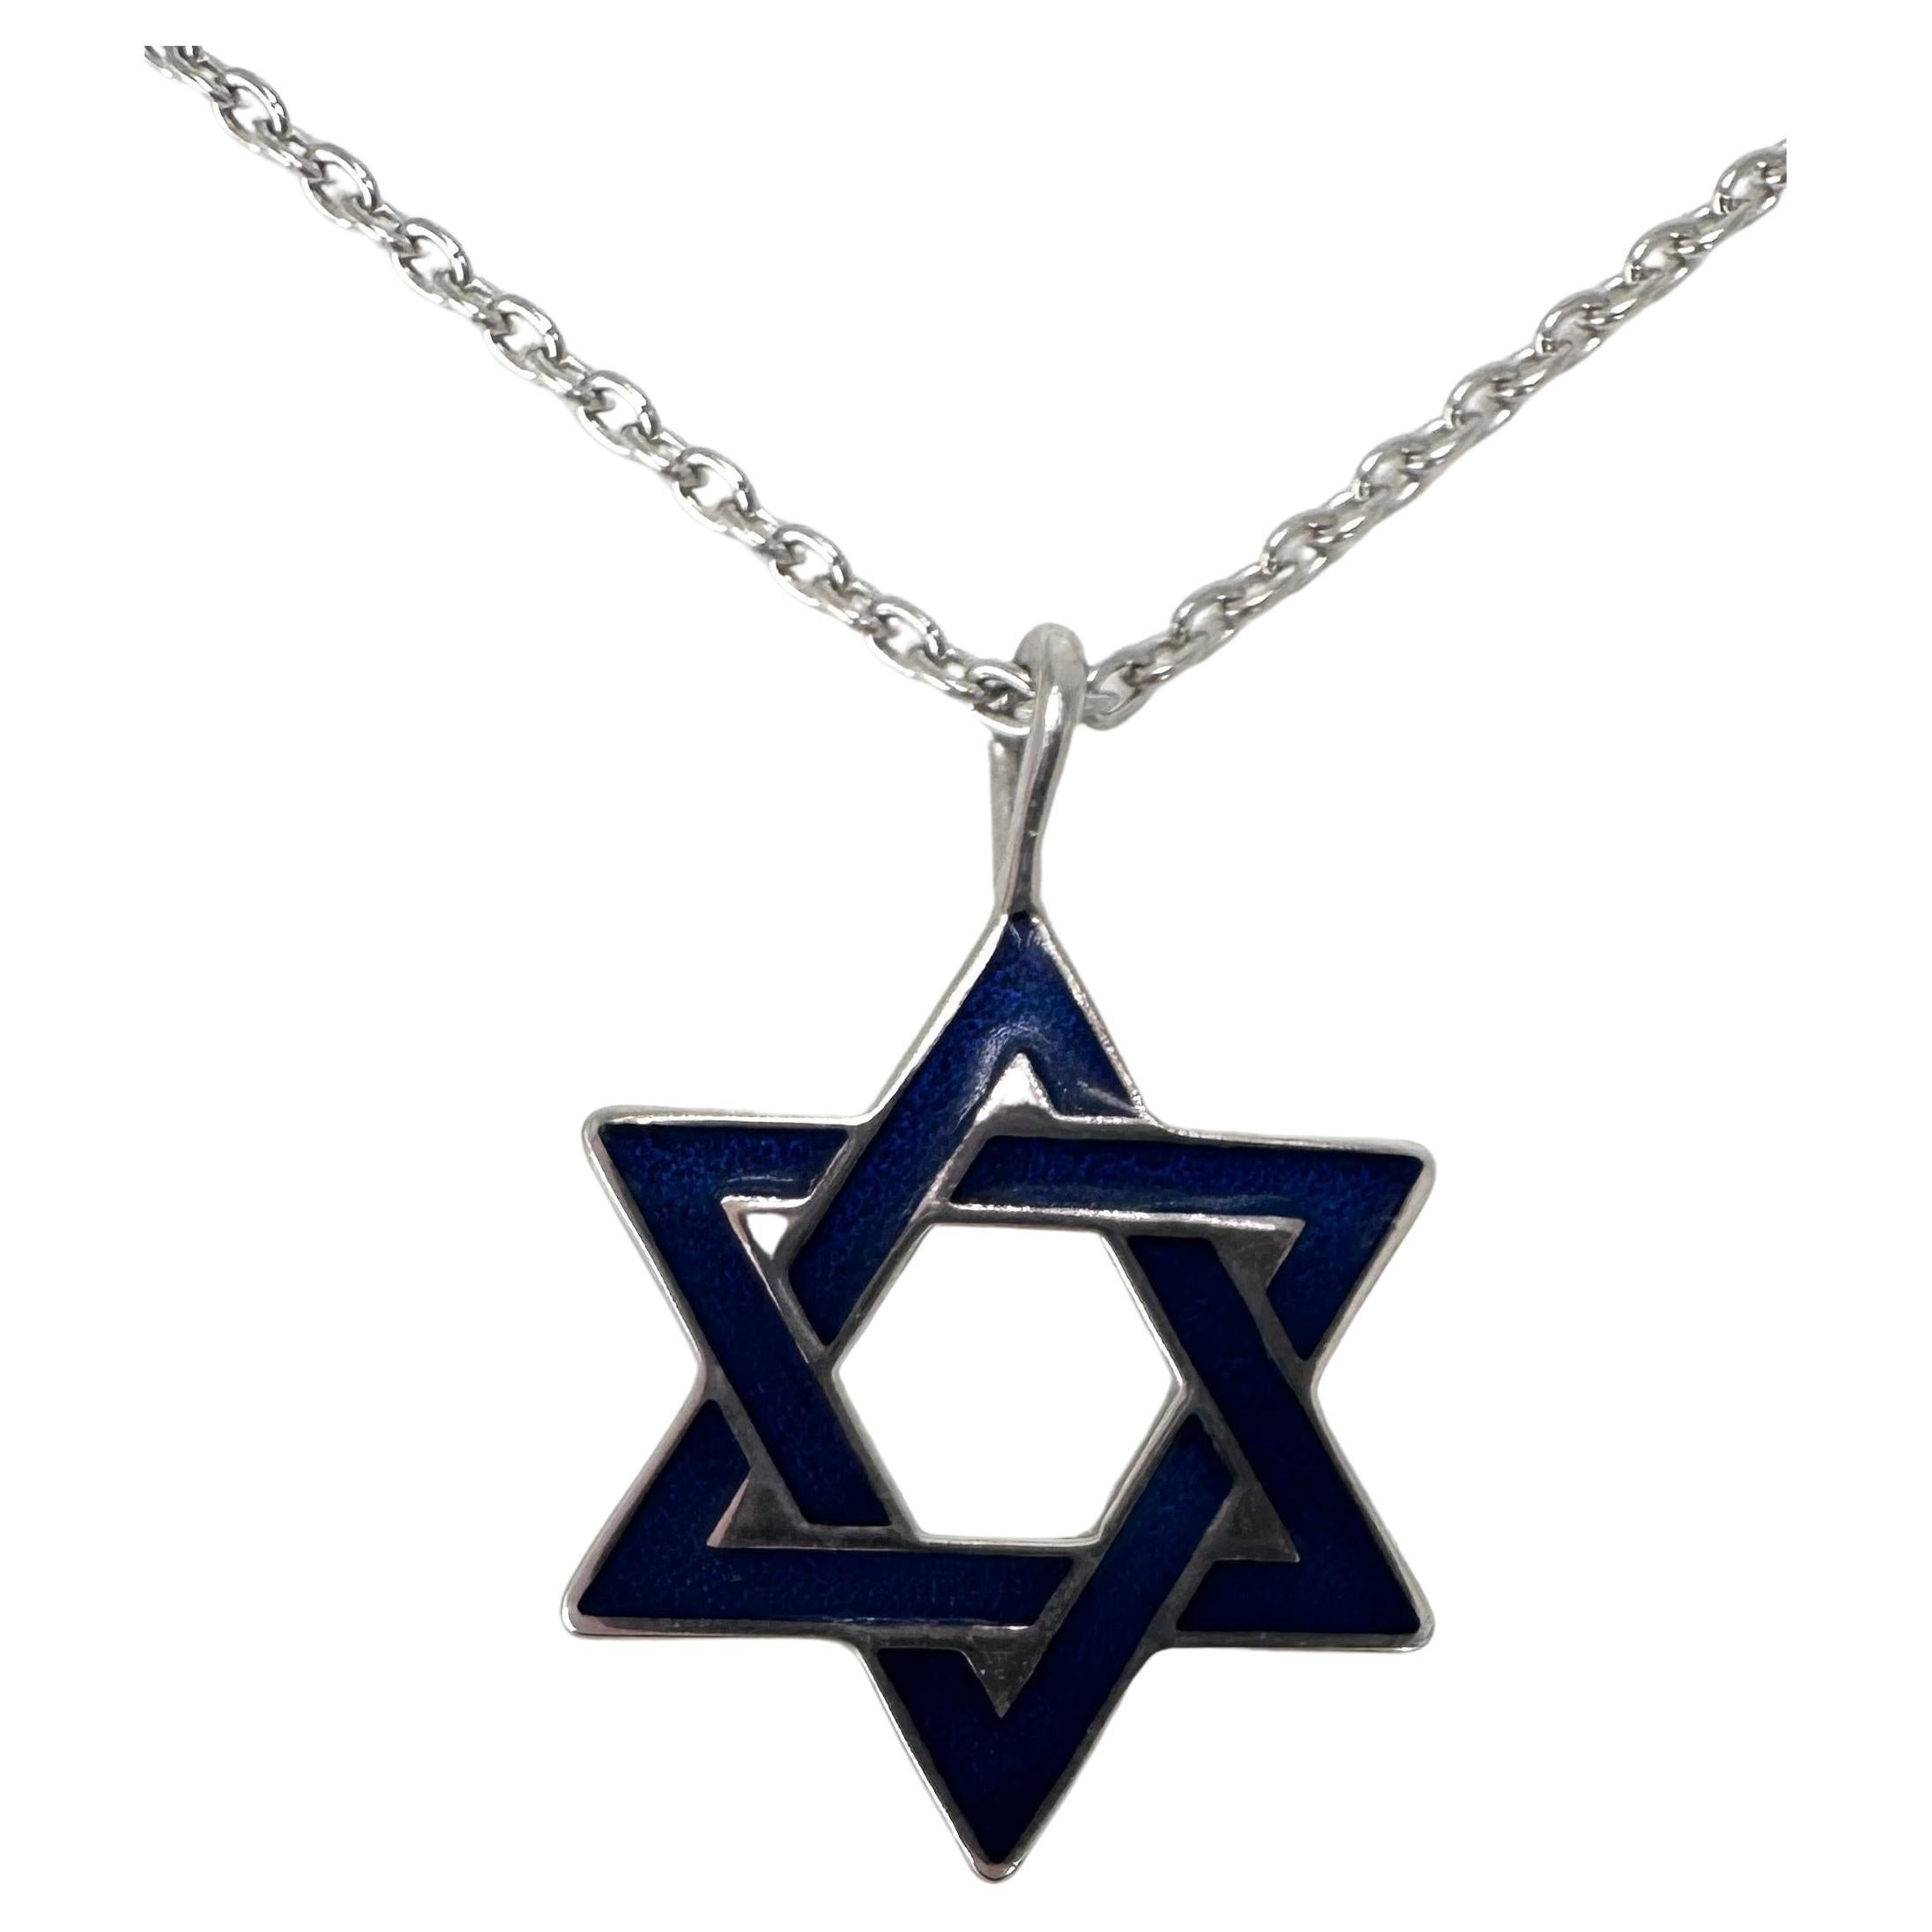 Star of David pendant necklace enamel pendant necklace SS 925